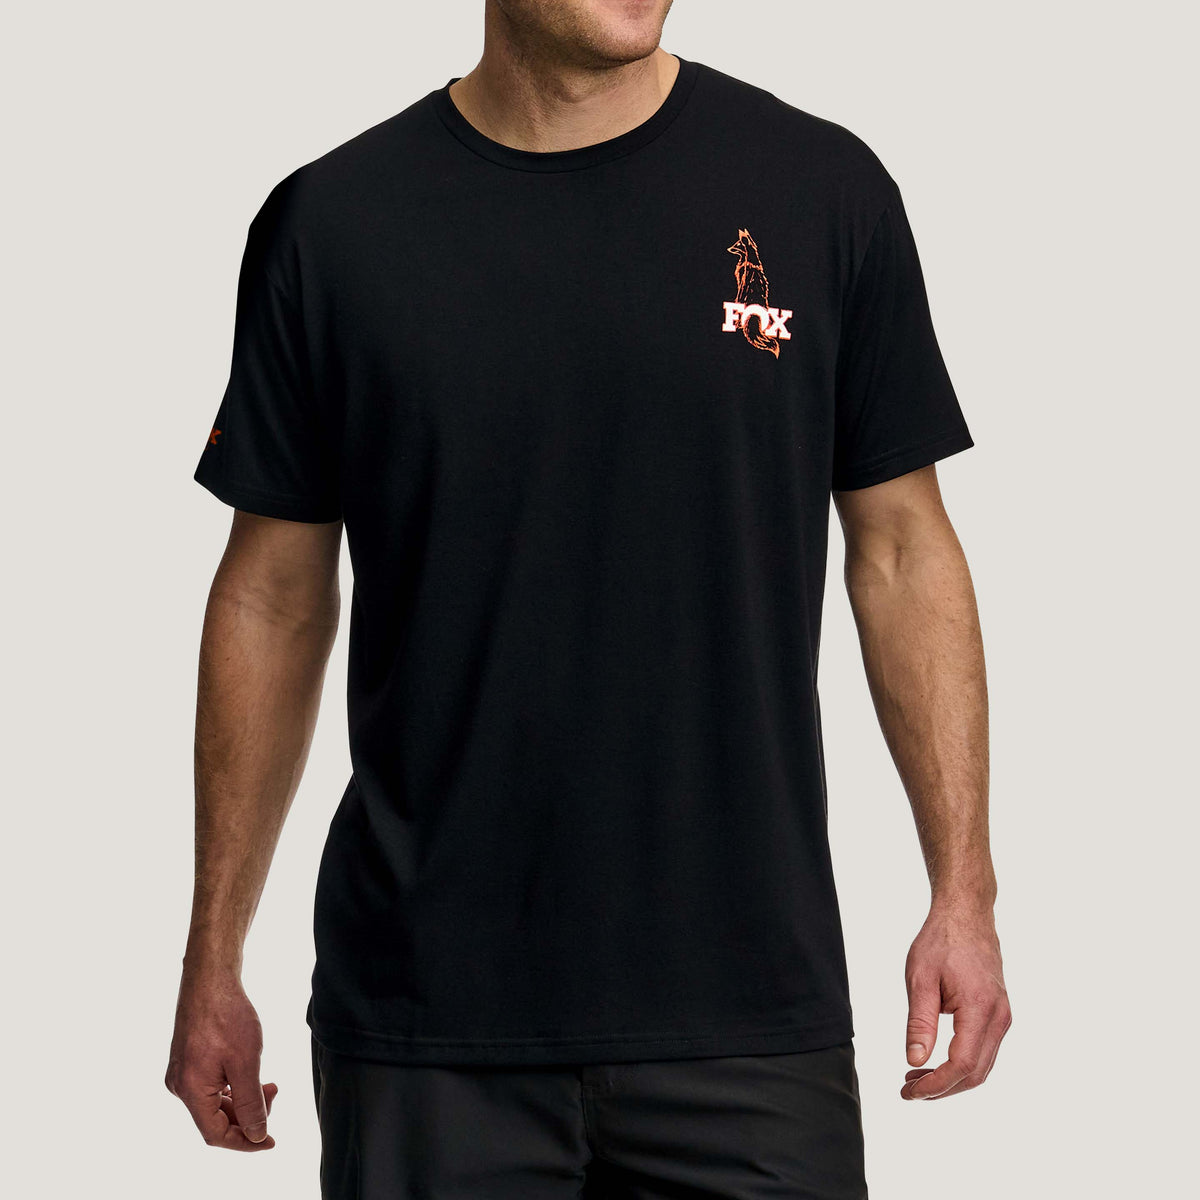 | | FOX Tailed Sleeve FOX T-Shirt The Short – | Shop